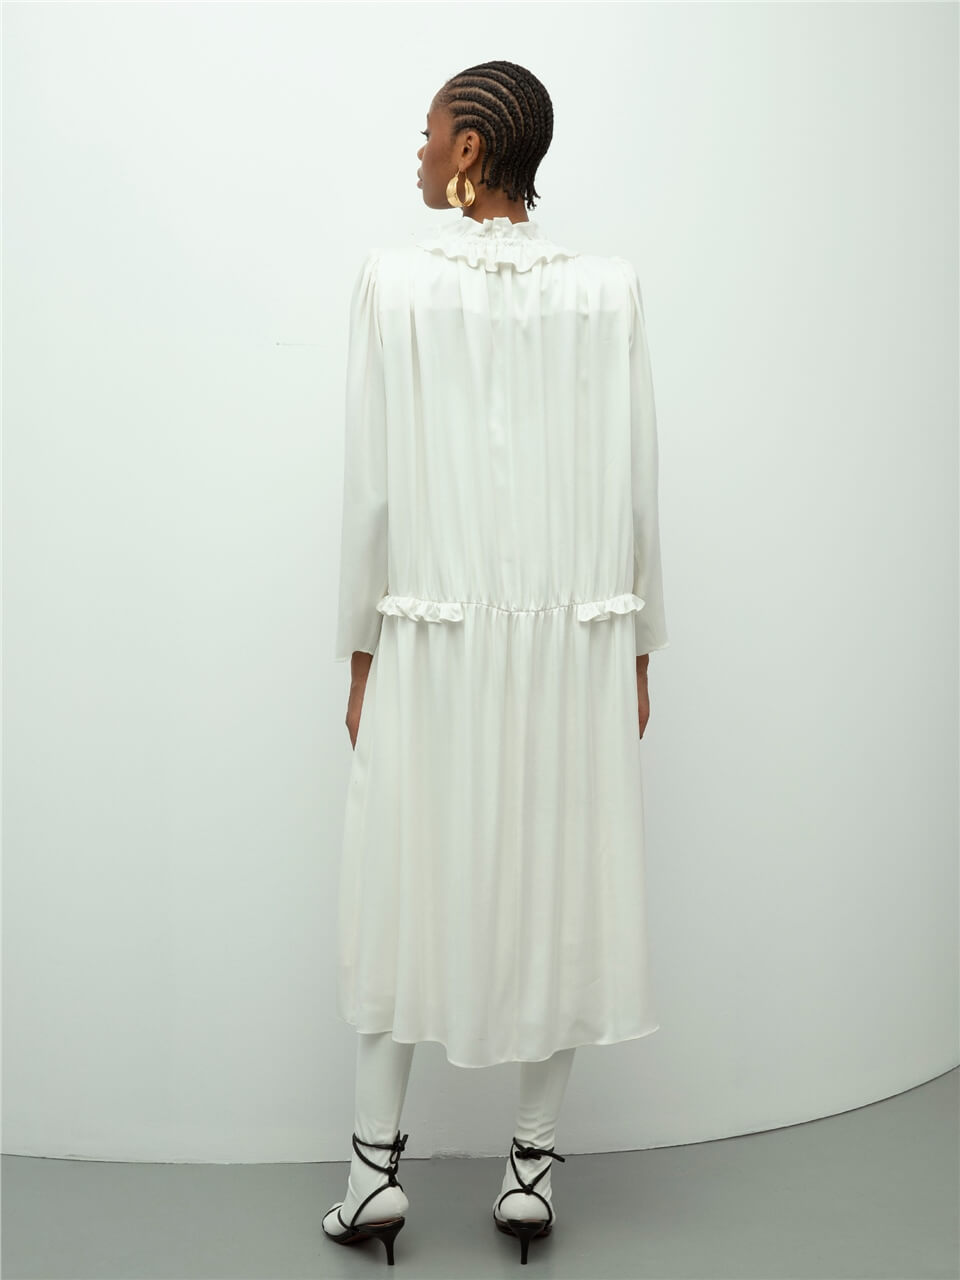 Ruffle Detailed White Dress